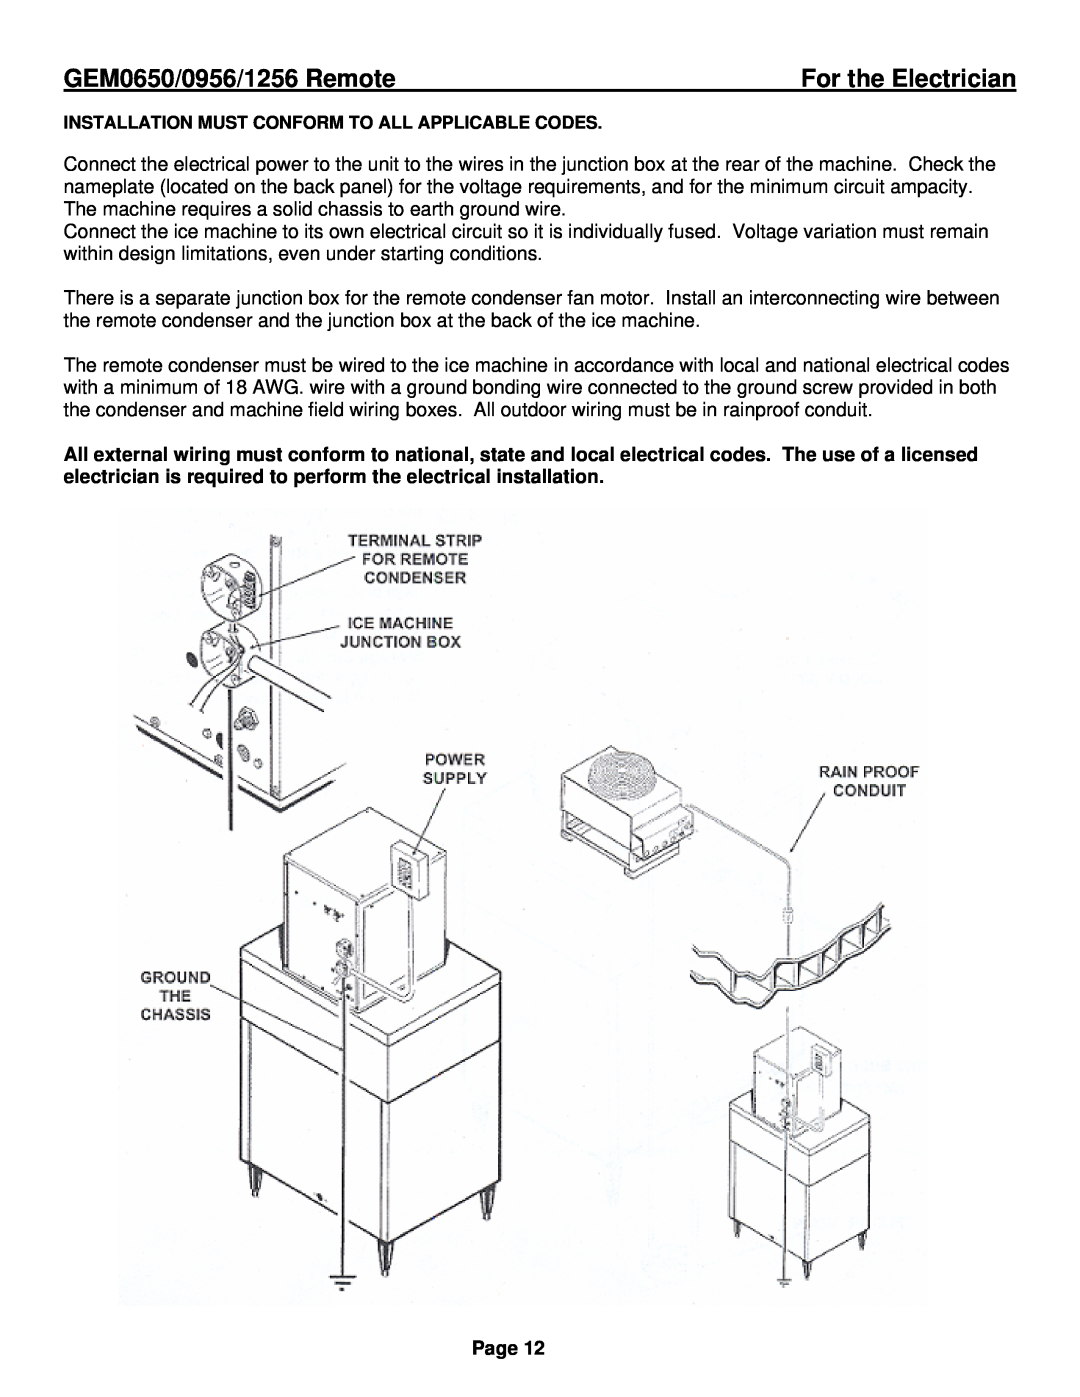 Ice-O-Matic GEM1256R, GEM0956R, GEM0650R installation manual For the Electrician, GEM0650/0956/1256 Remote, Page 